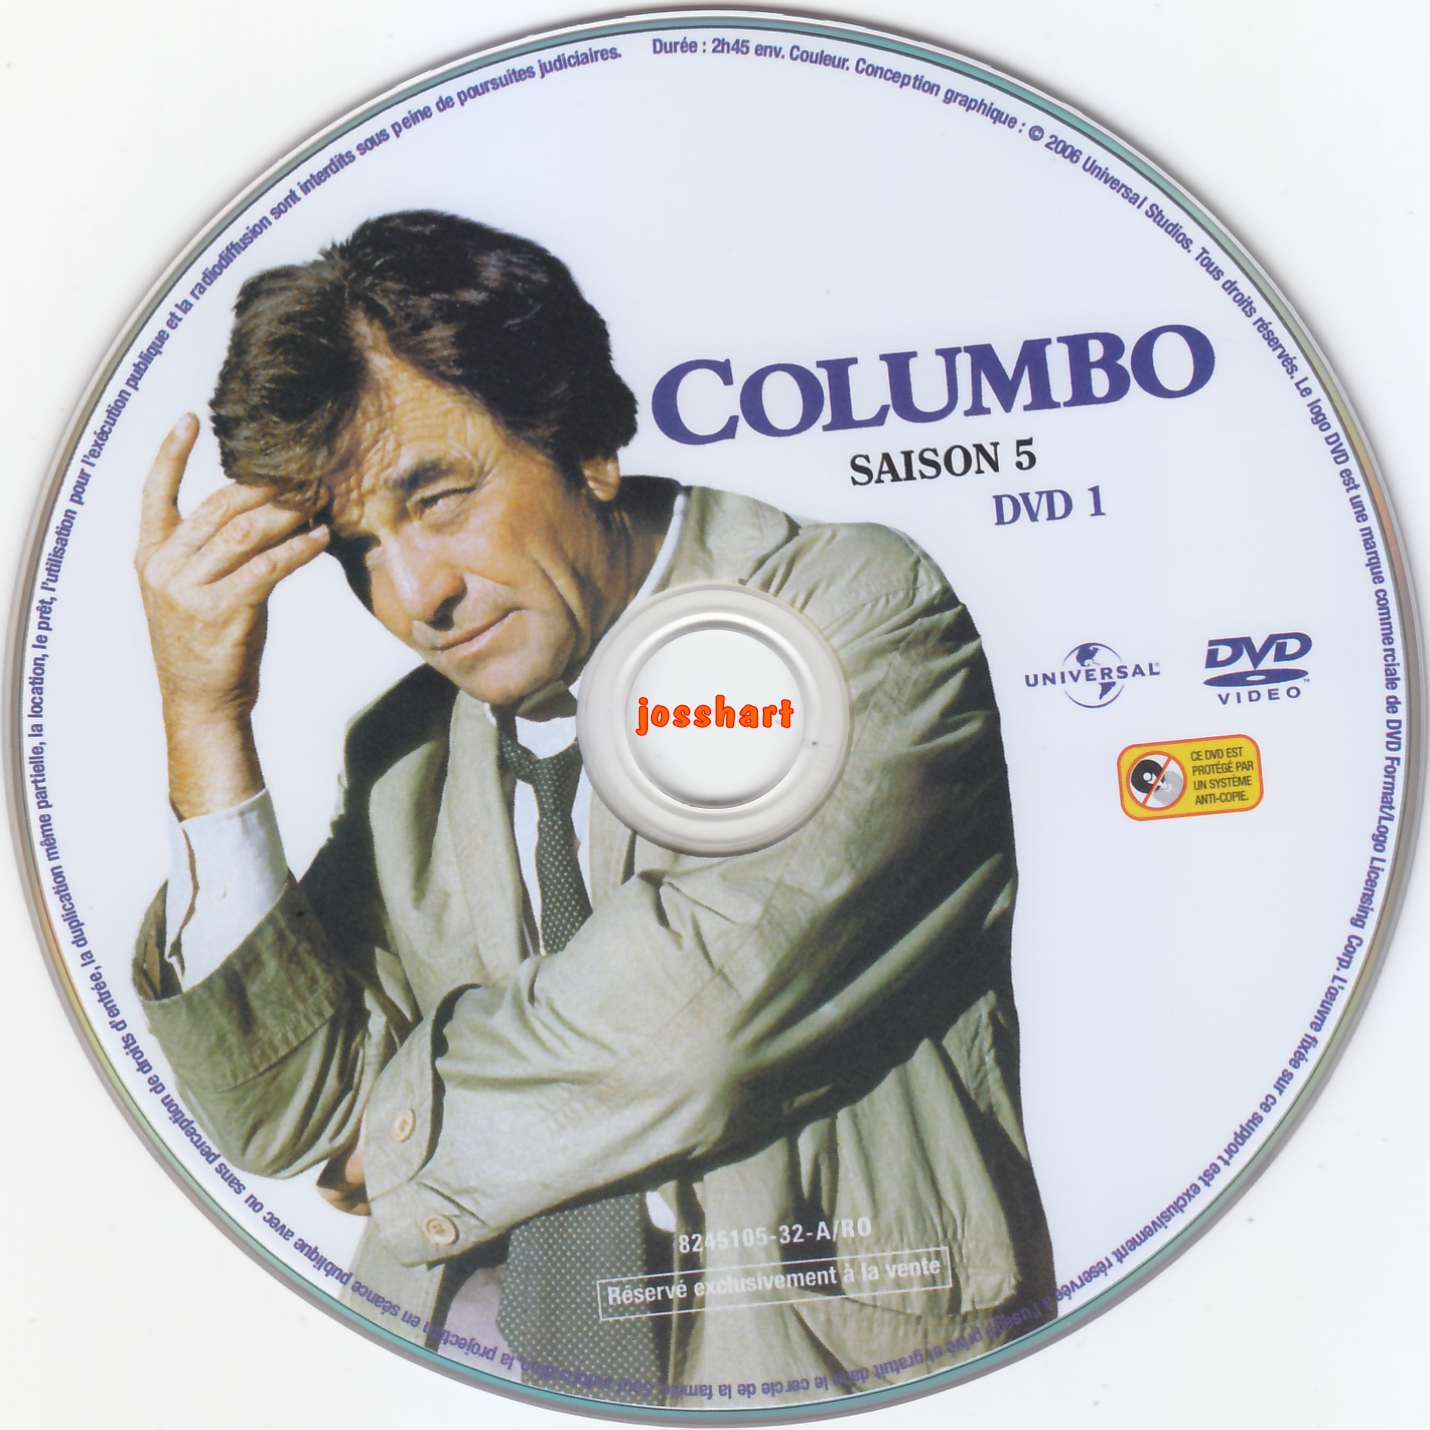 Columbo S5 DISC1